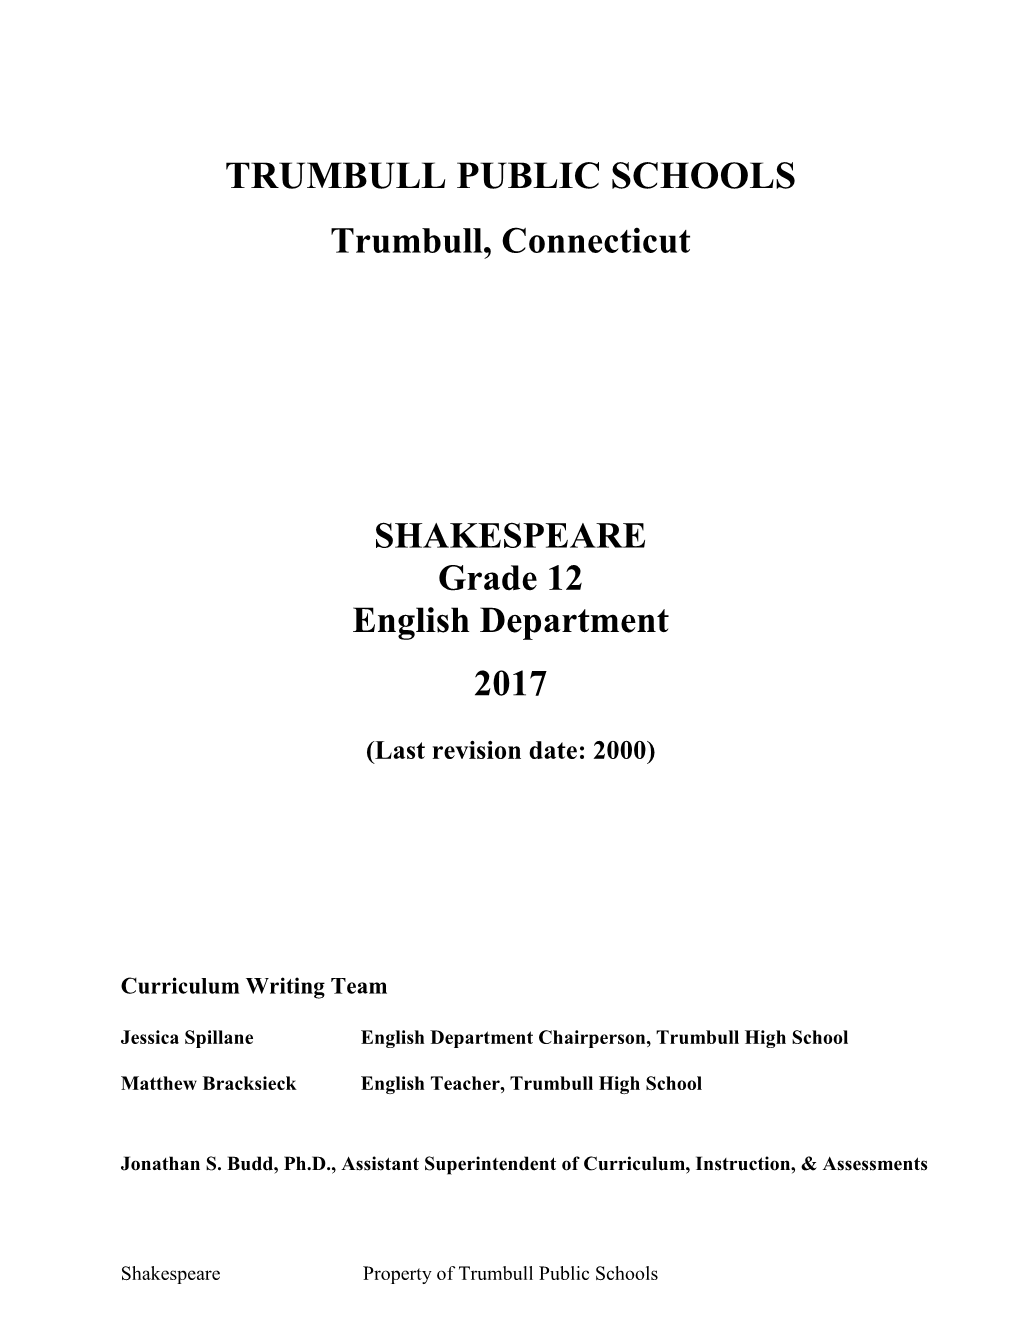 Trumbull, Connecticut SHAKESPEARE Grade 12 English Department 2017